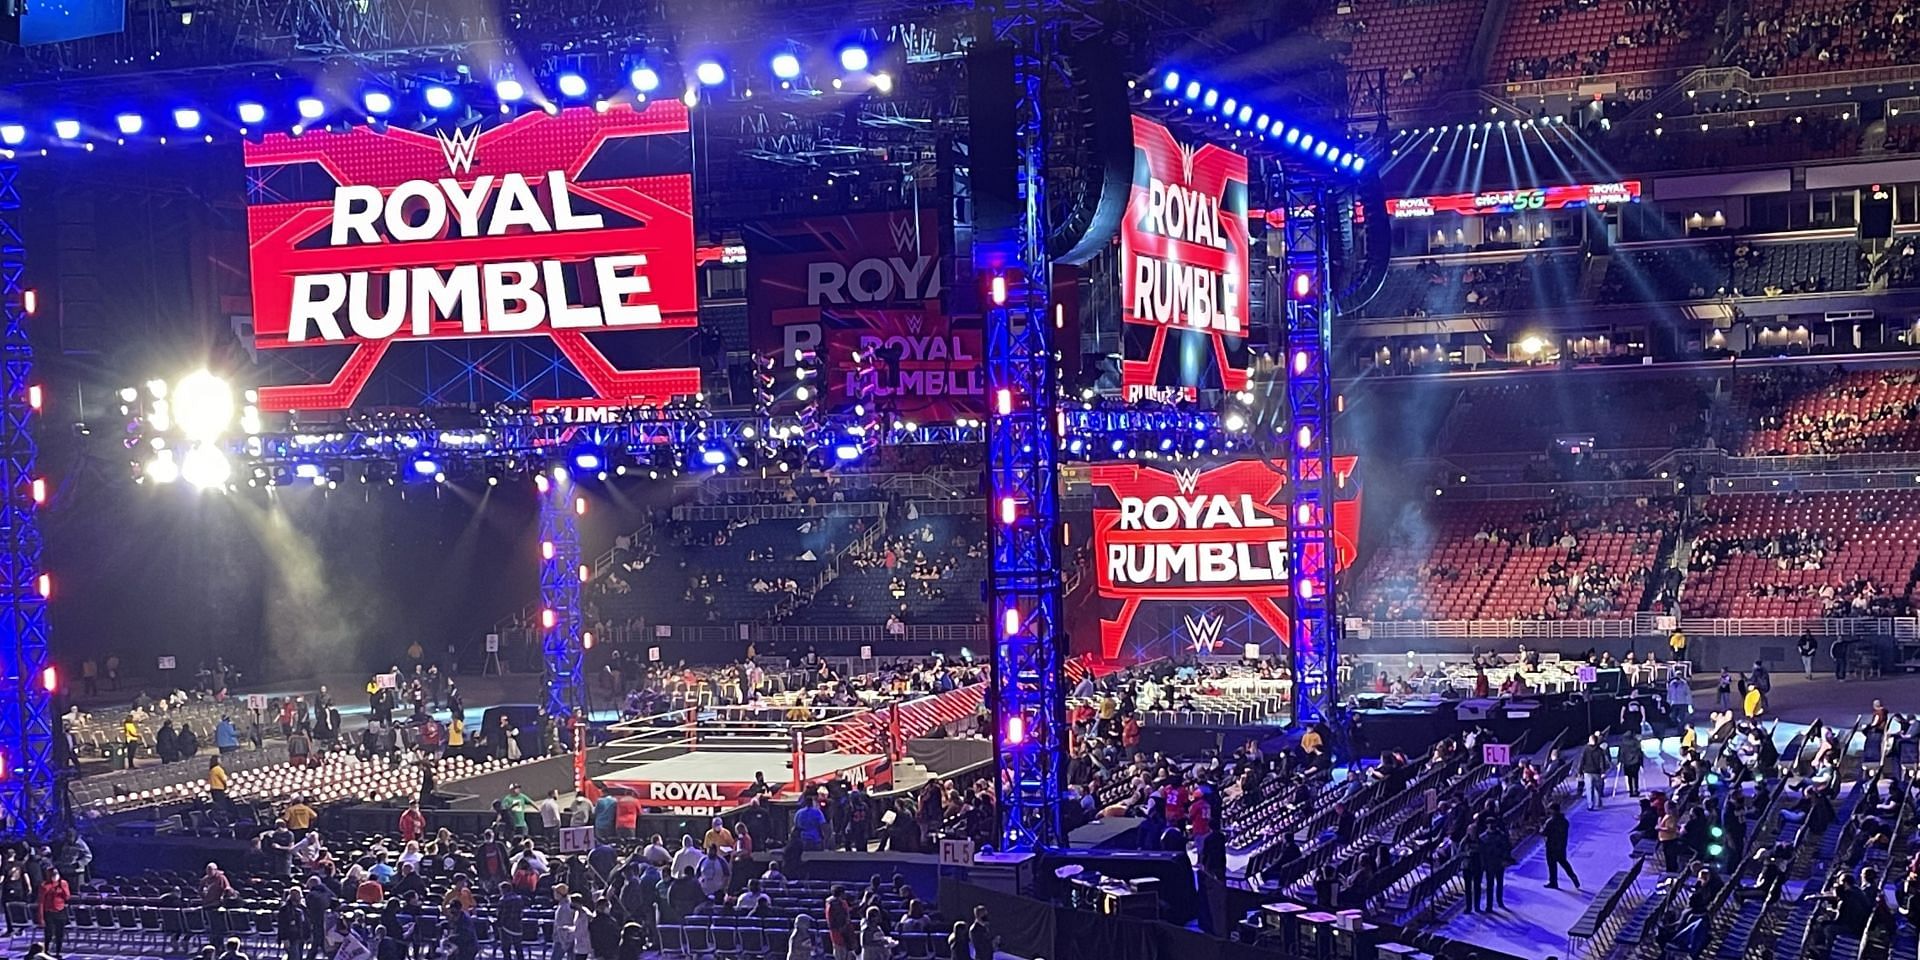 The Royal Rumble 2022 arena